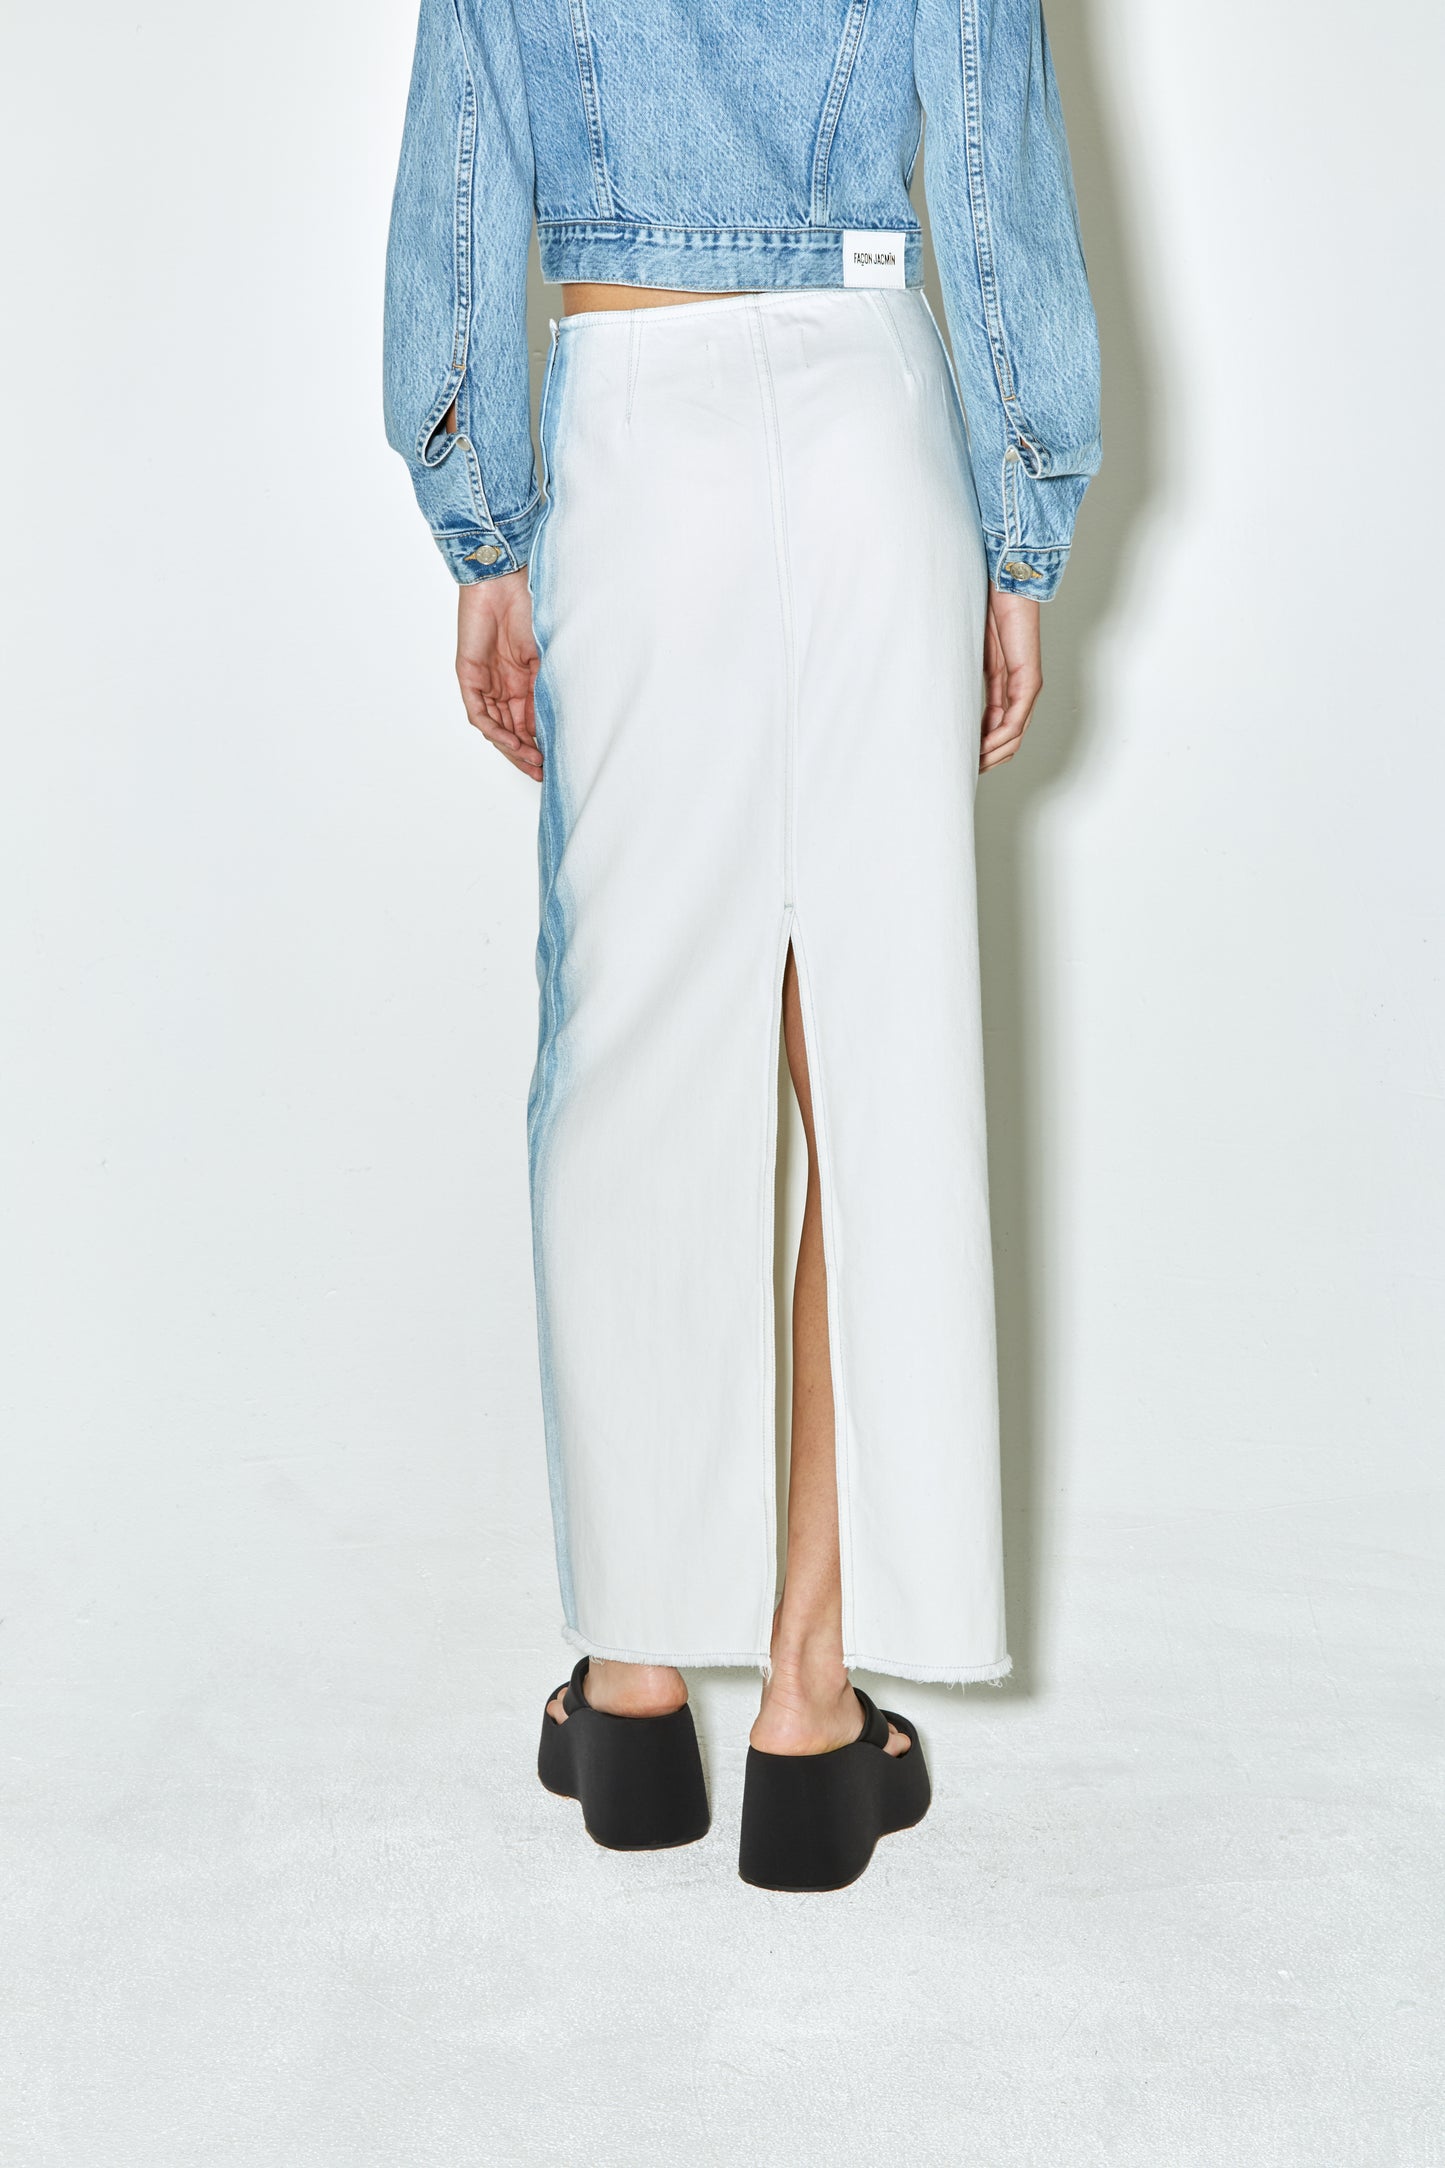 JINJI skirt blue side strip on white denim